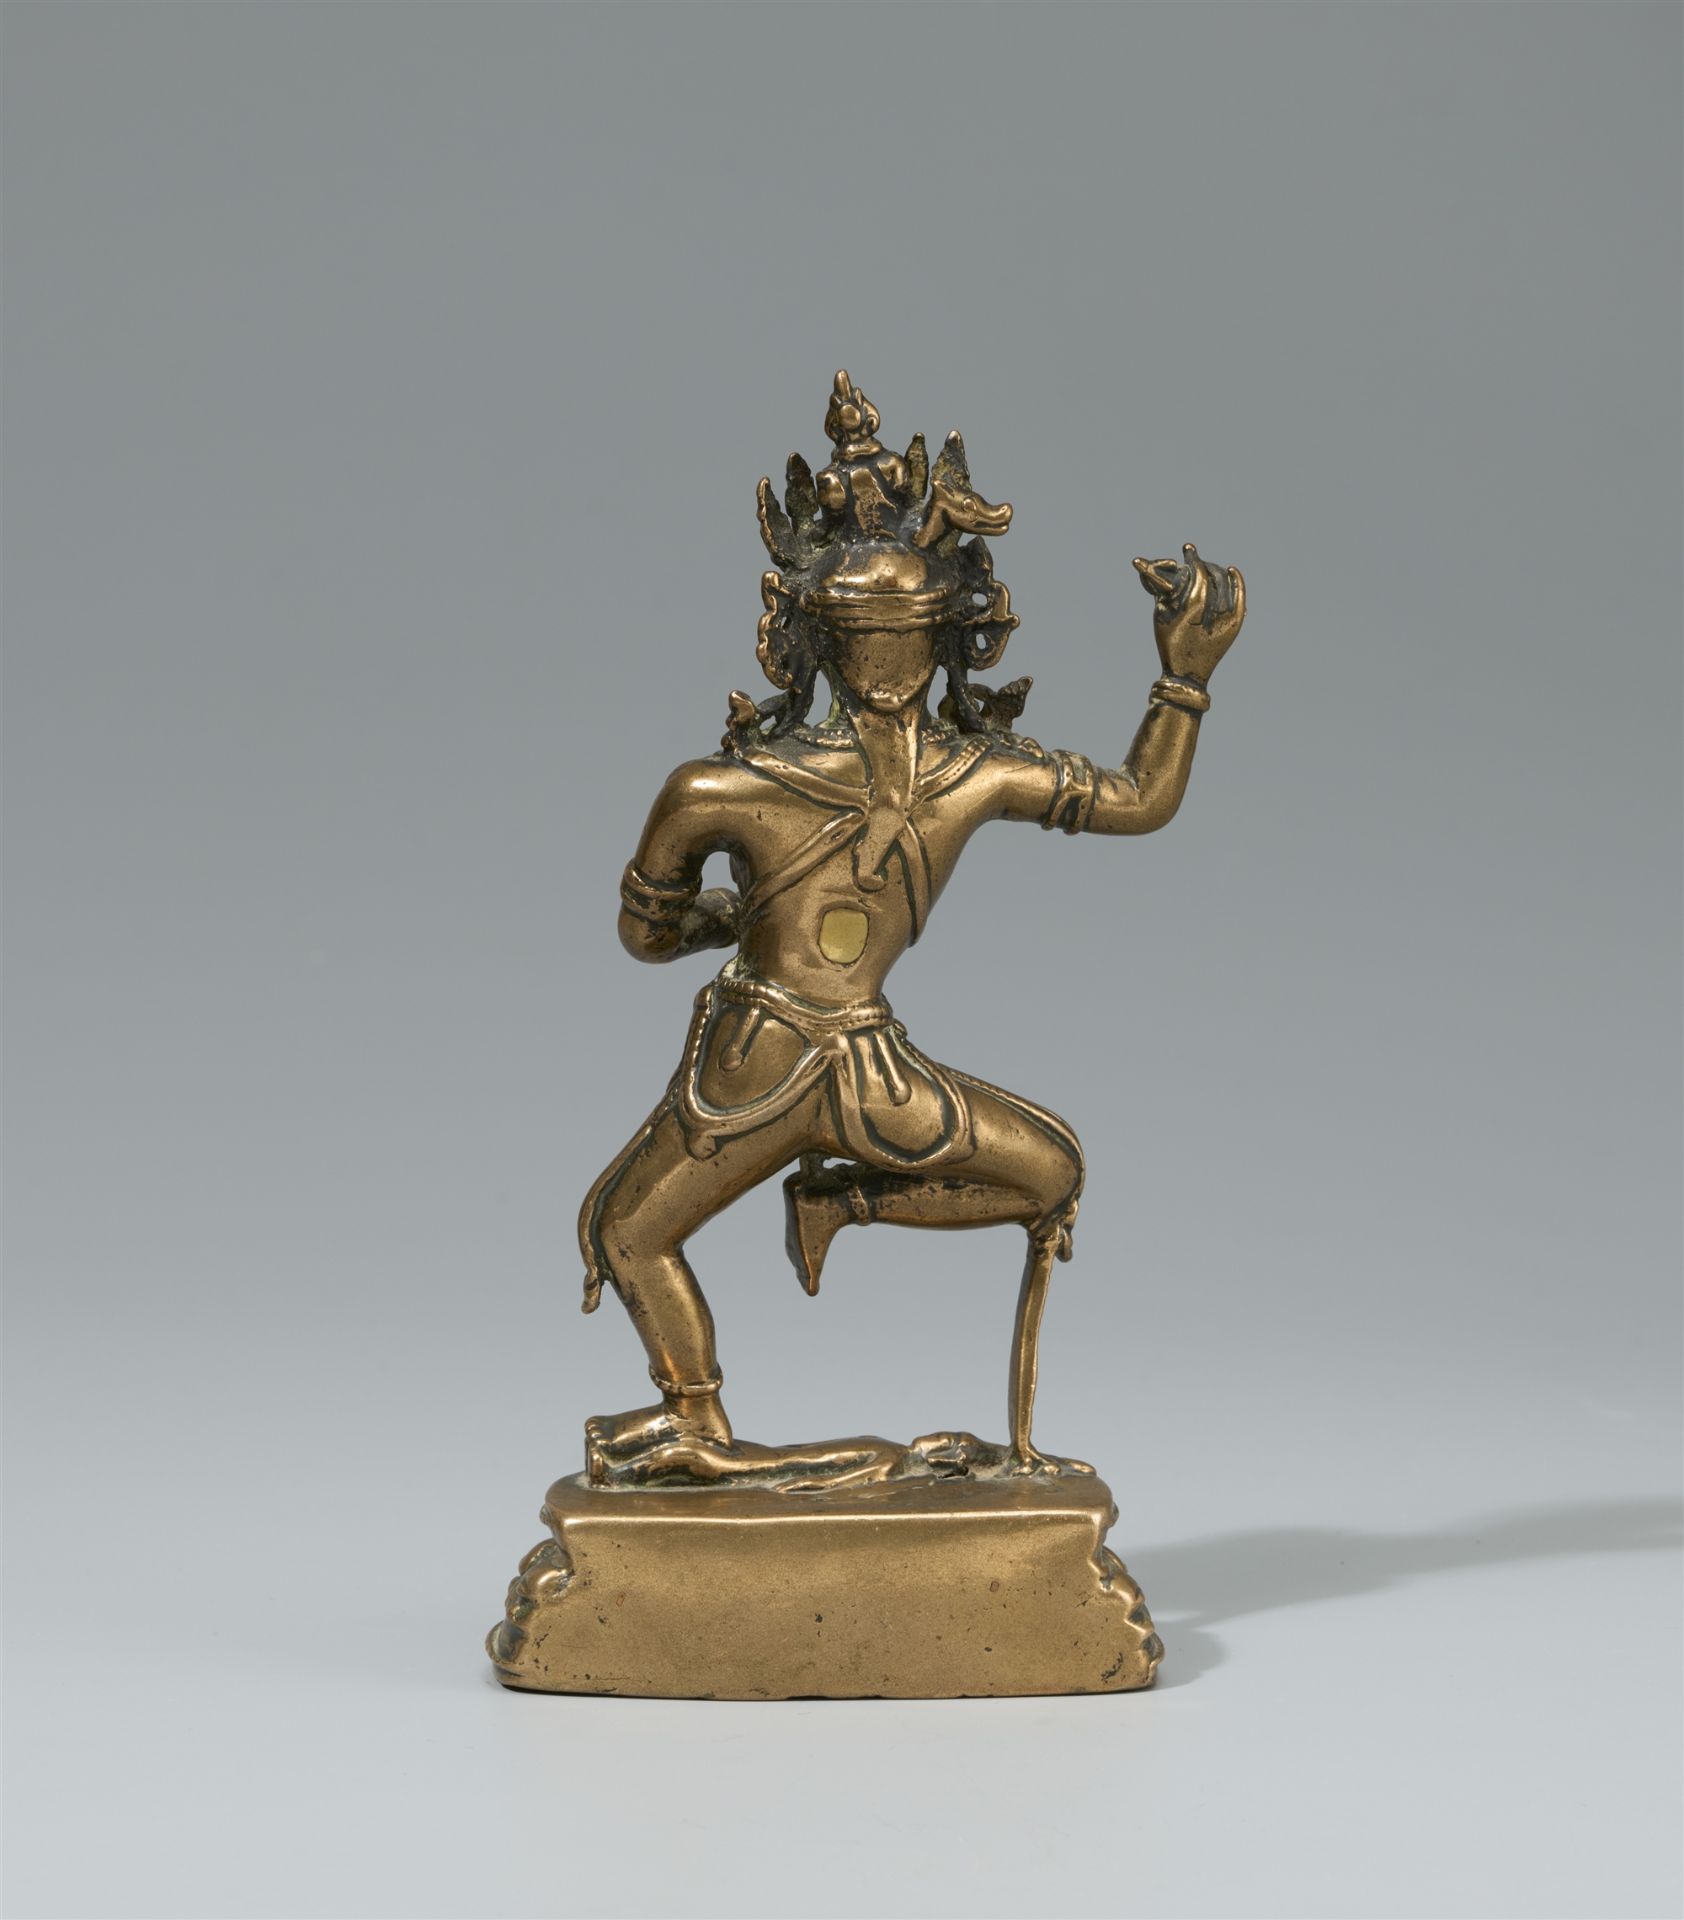 A copper alloy figure of Vajravarahi. Tibet, 14th-16th century - Image 2 of 2